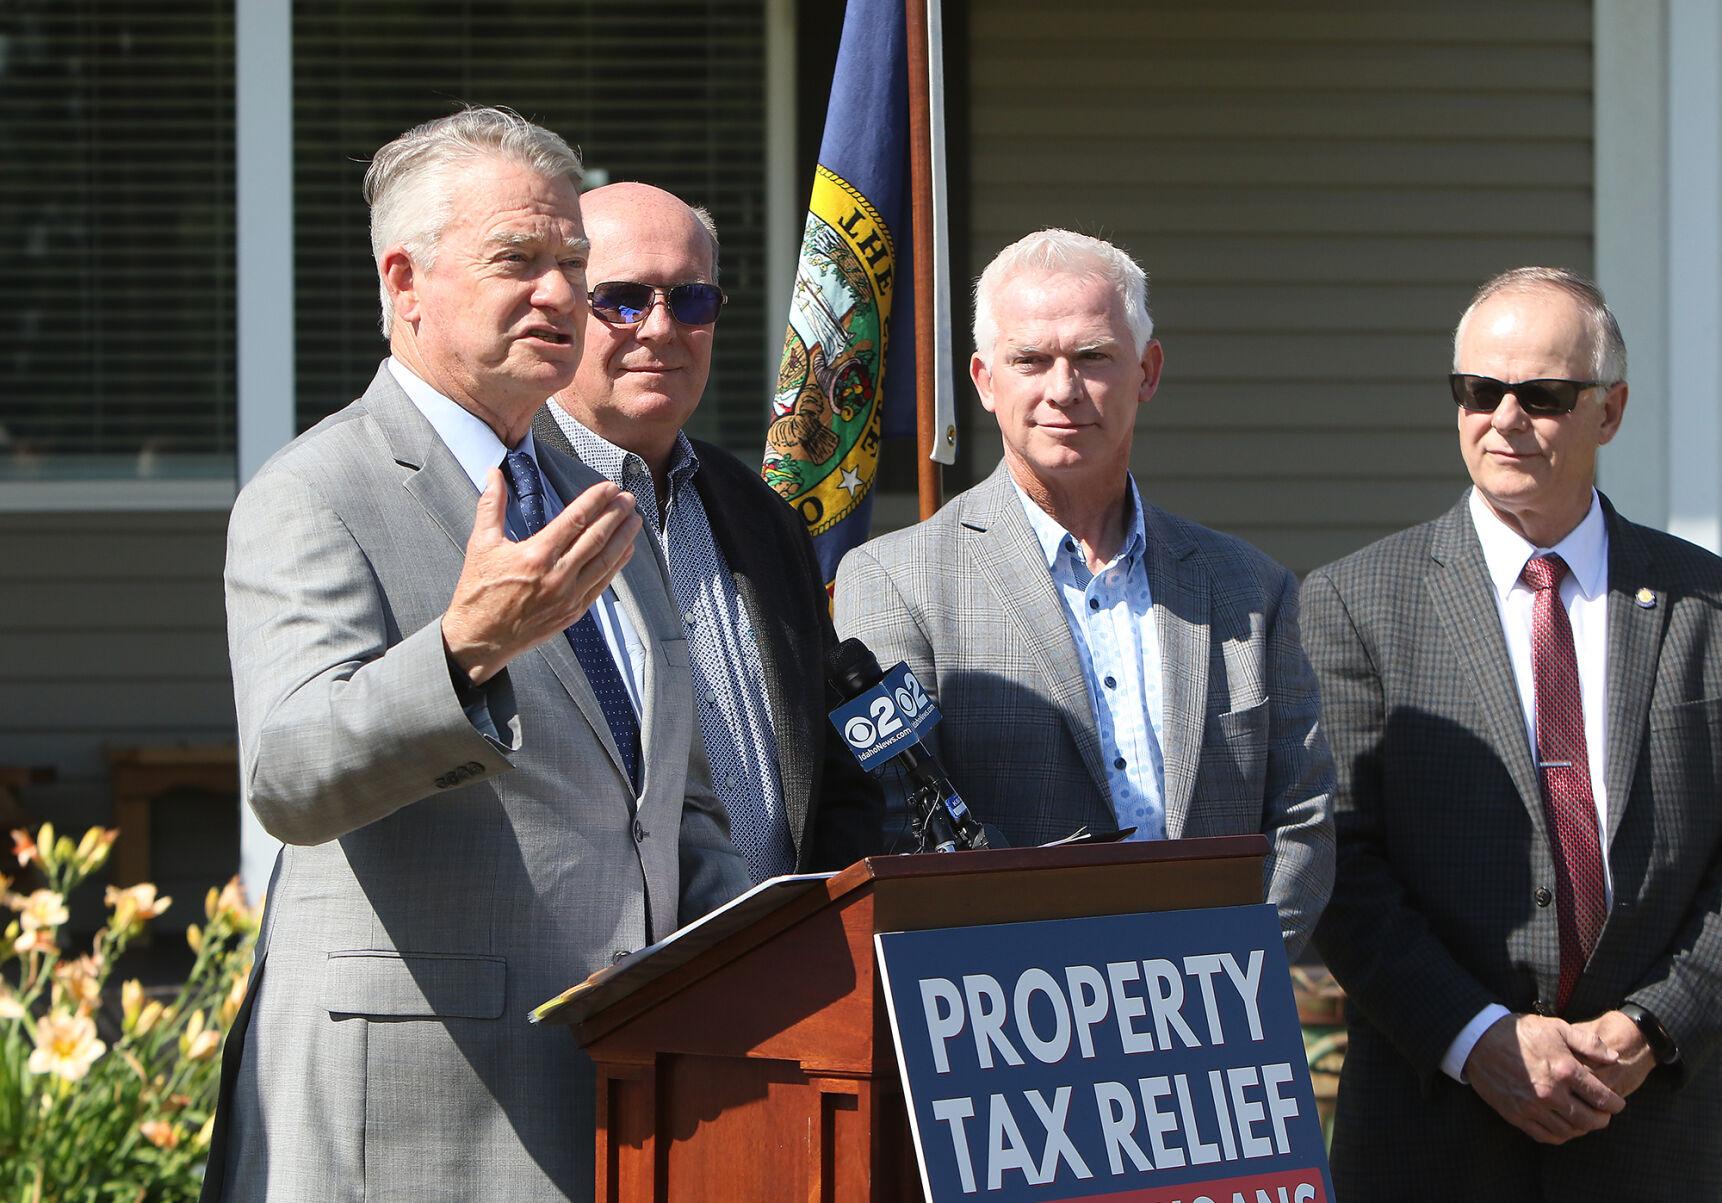 Idaho Property Tax Relief